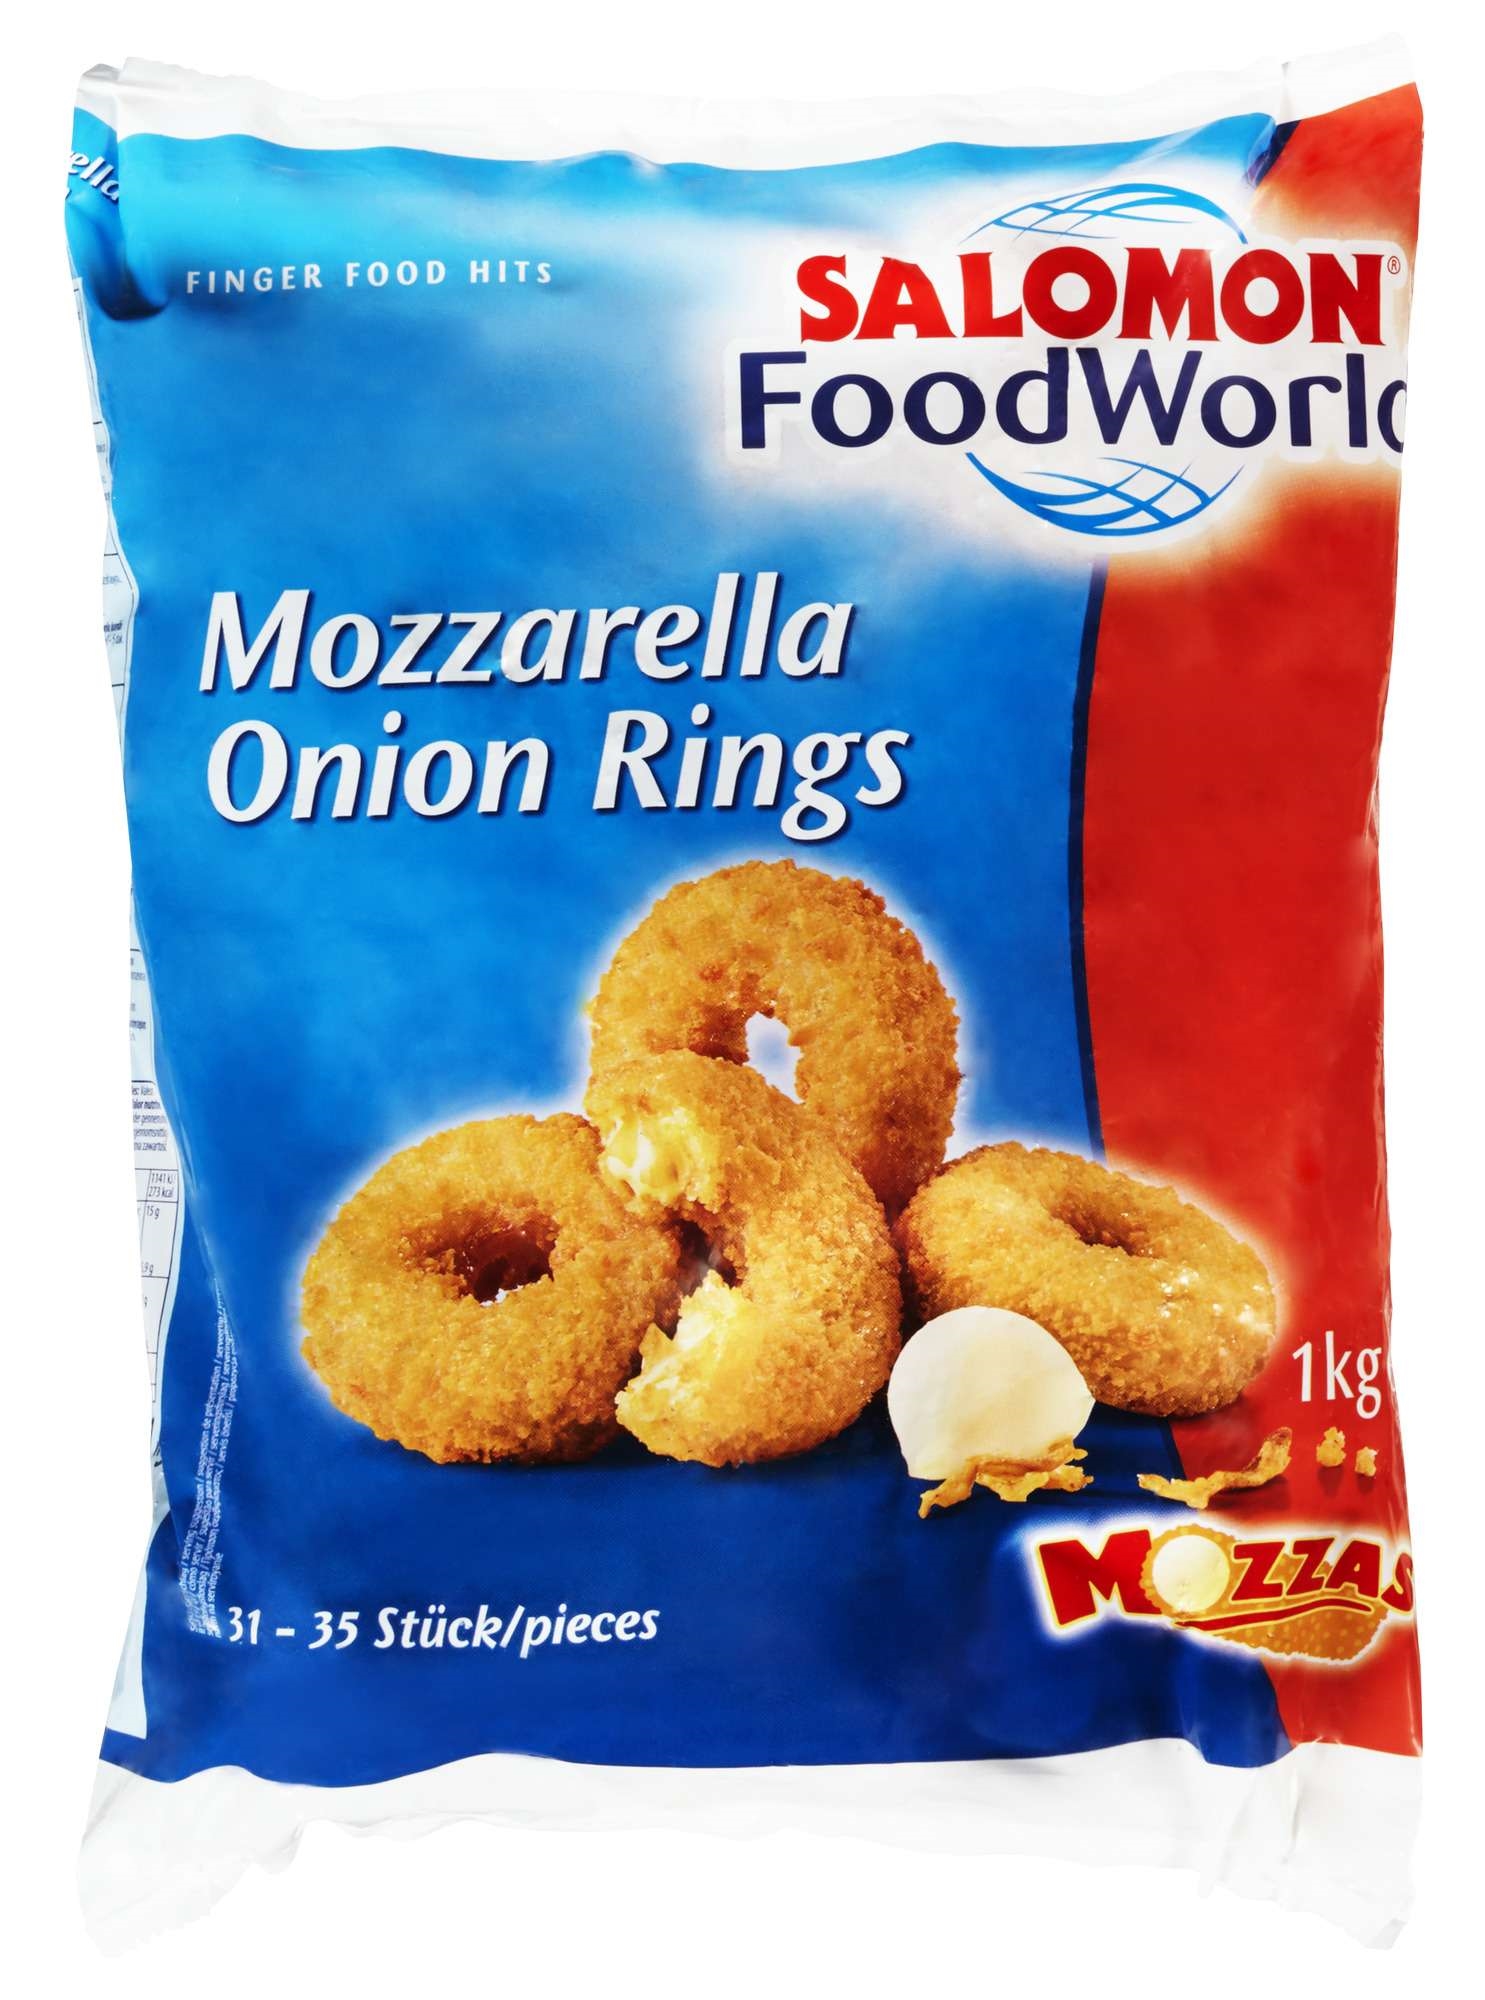 Mozzarella onion rings    1kg